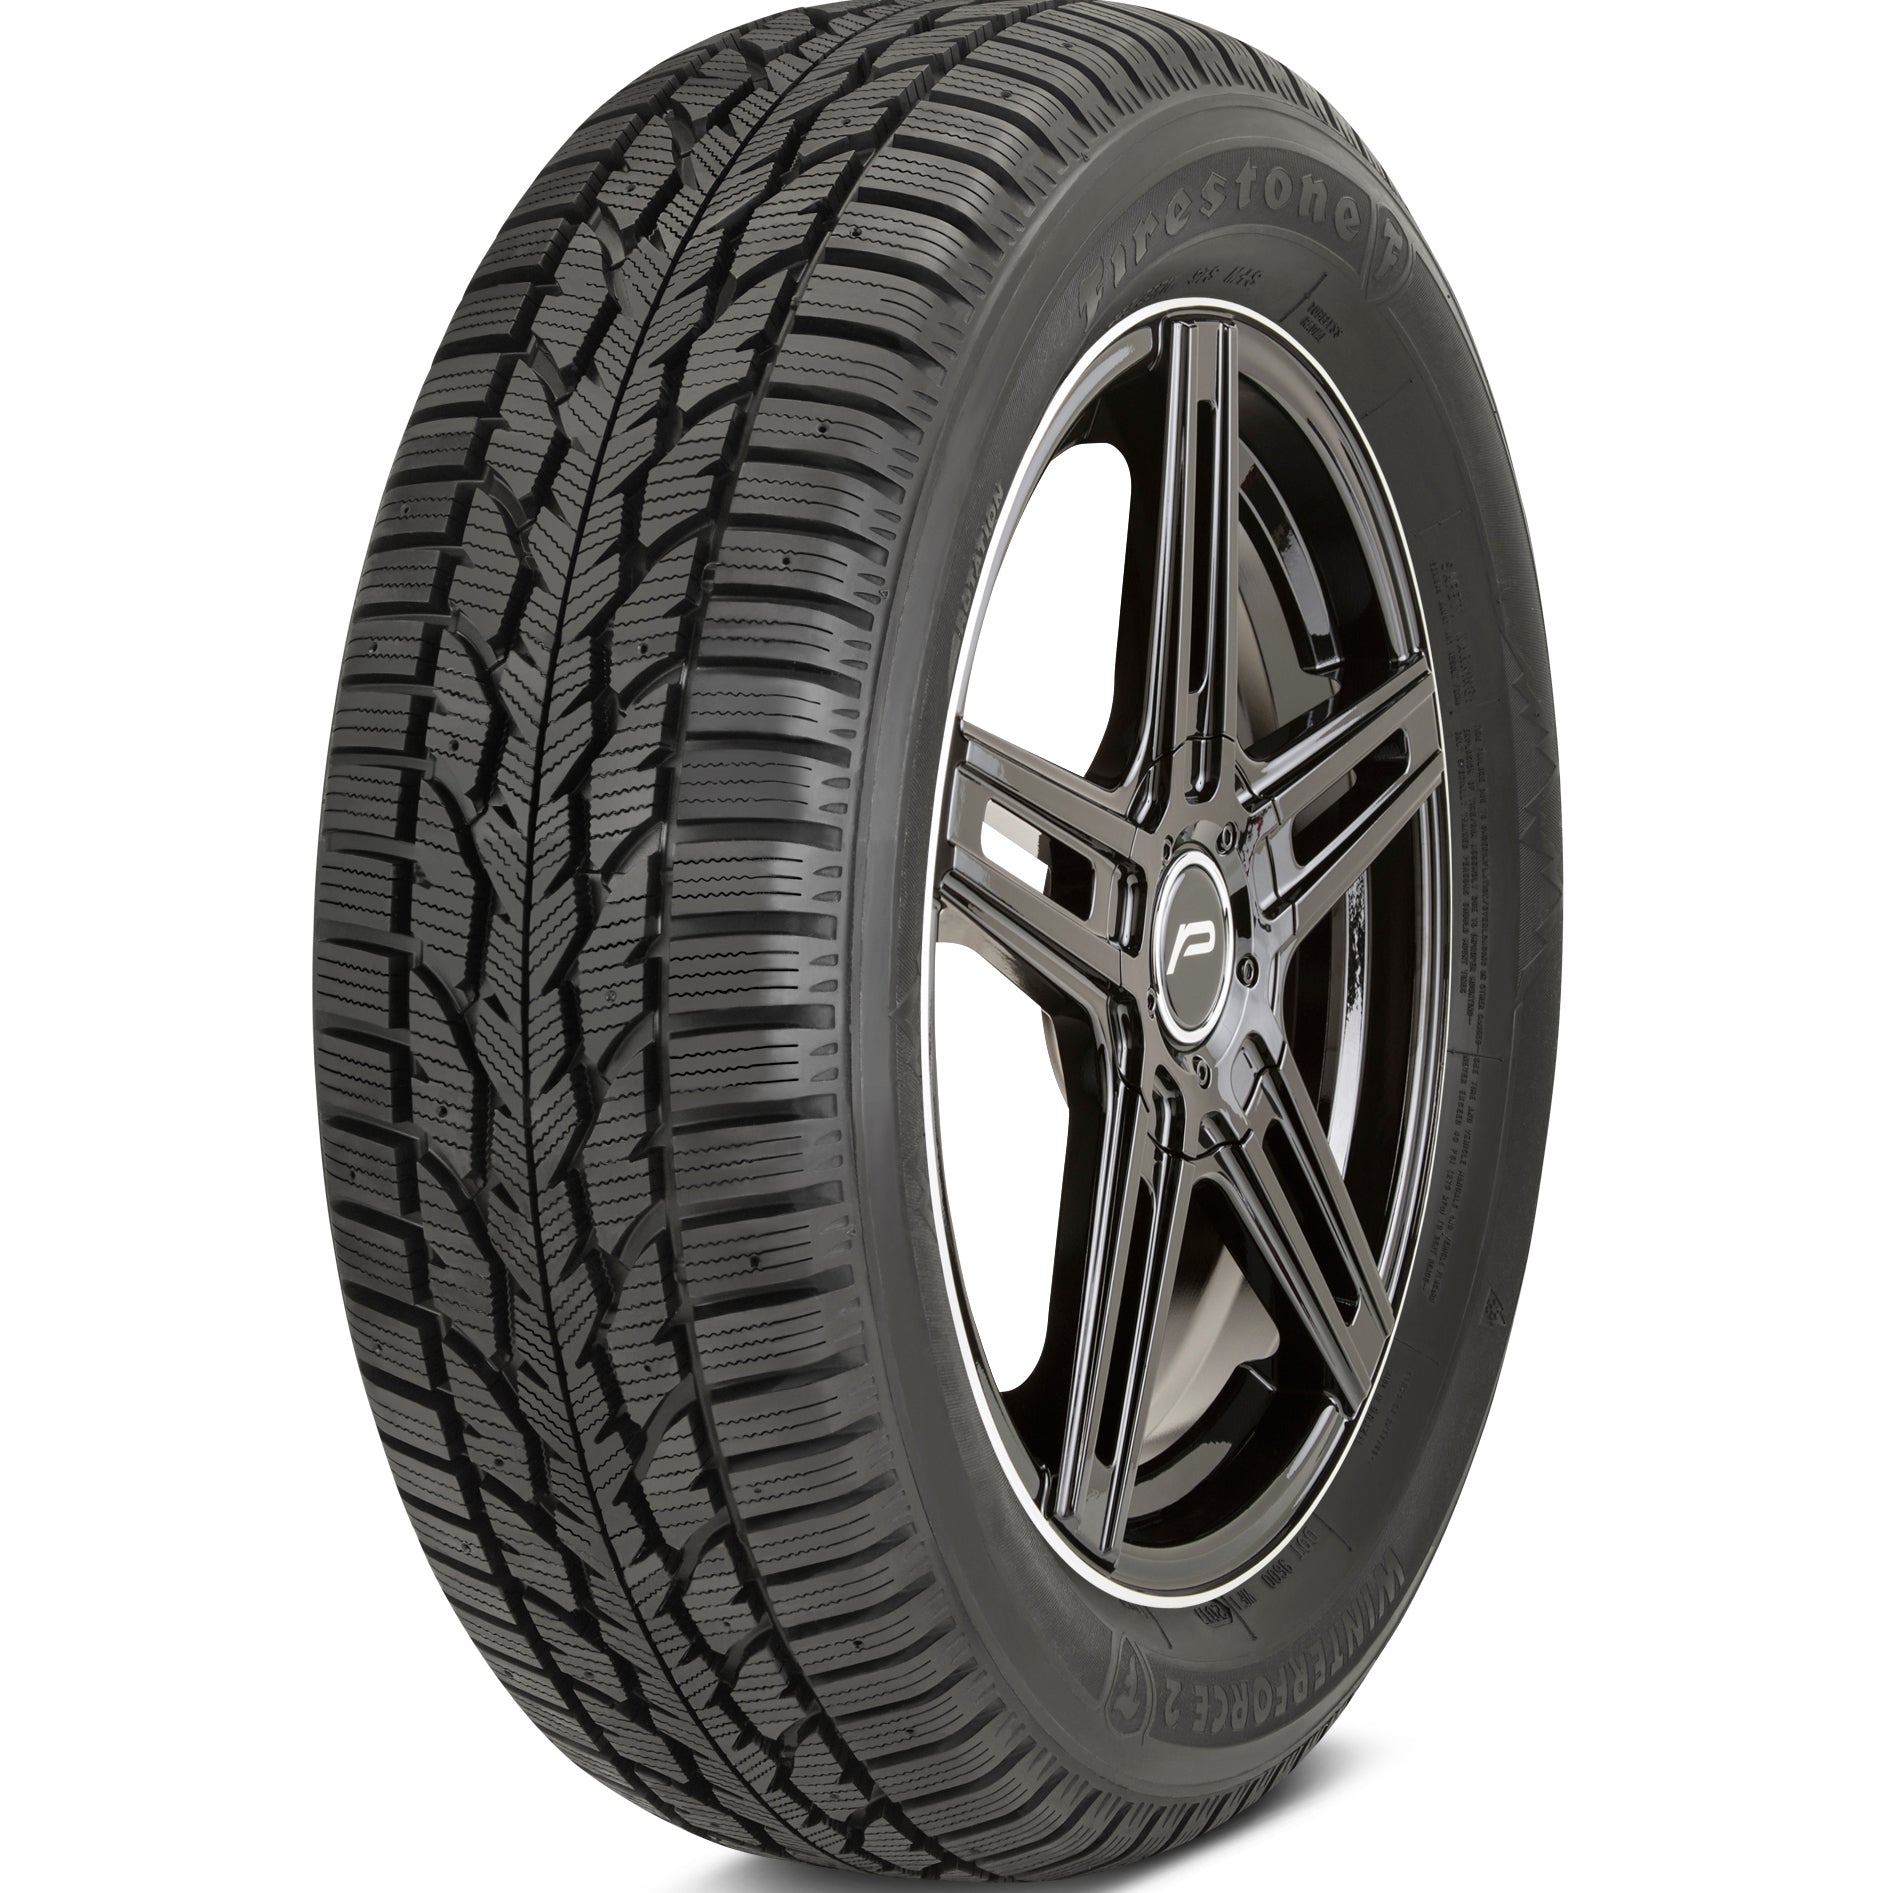 FIRESTONE WINTERFORCE2 205/60R16 (25.7X8.1R 16) Tires